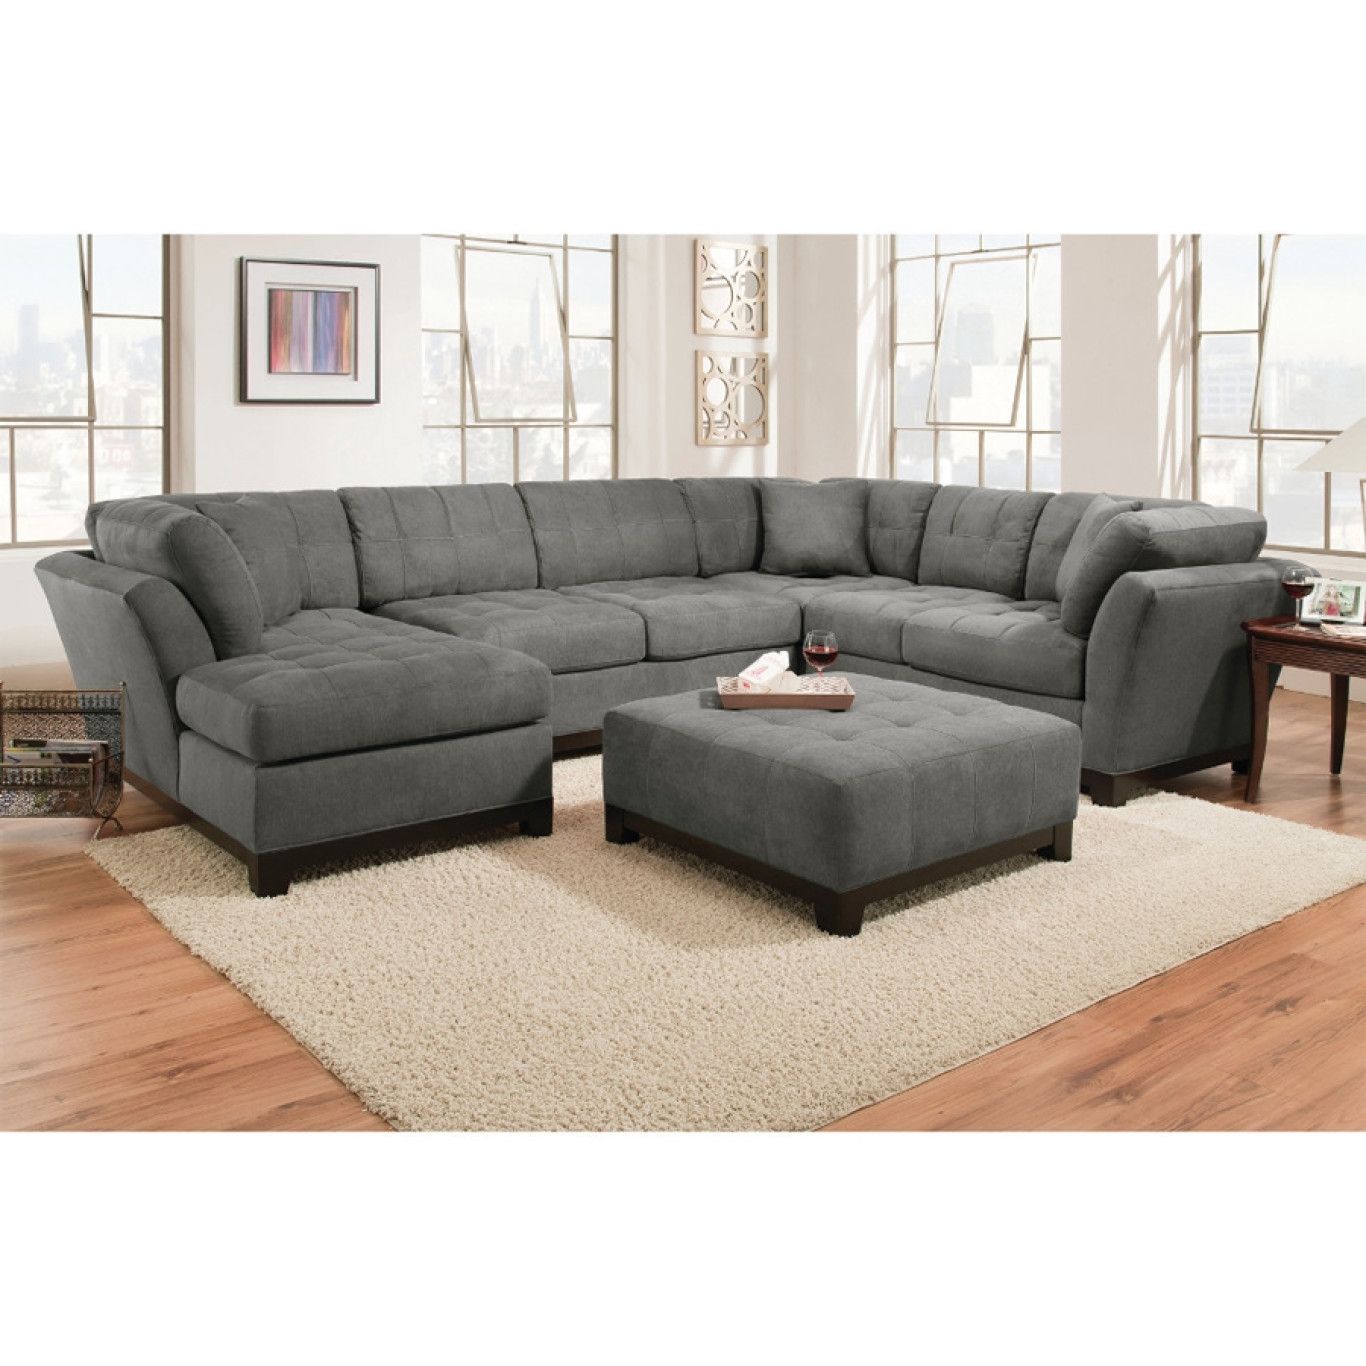 Bassett Furniture Greensboro Nc With Greensboro Nc Sectional Sofas (Photo 2 of 10)